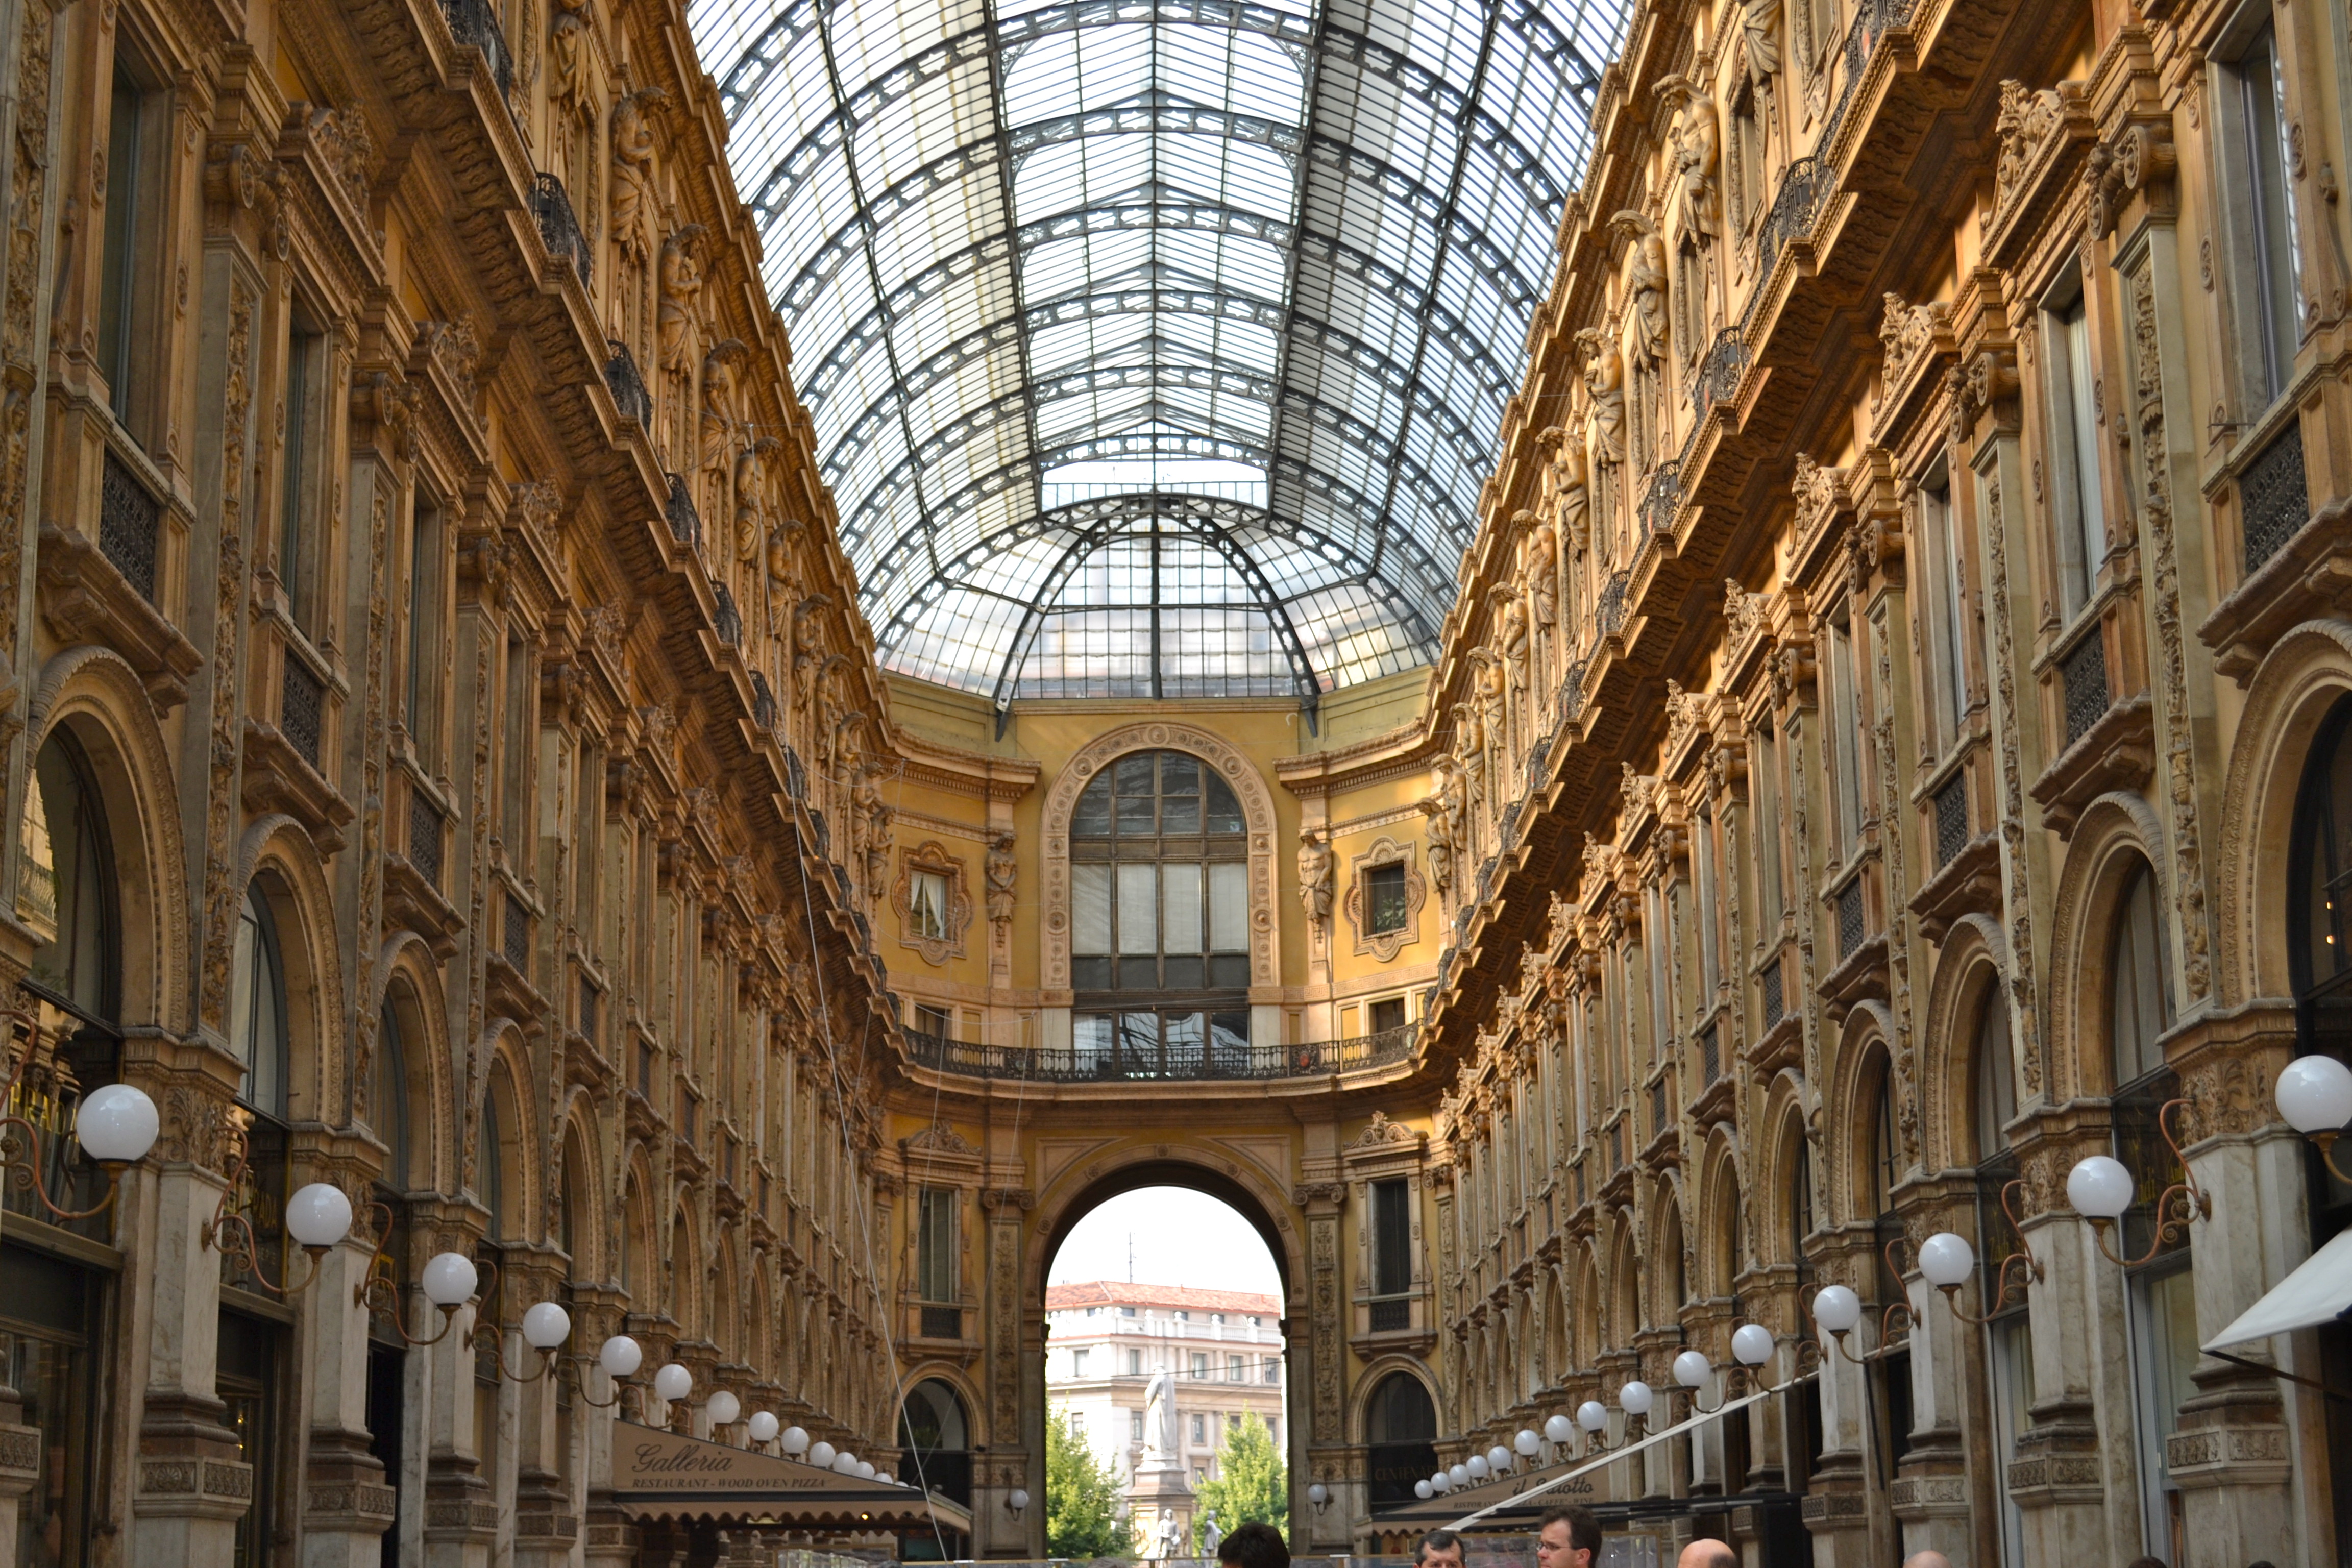 Lighting design for the Galleria Vittorio Emanuele in Milan by